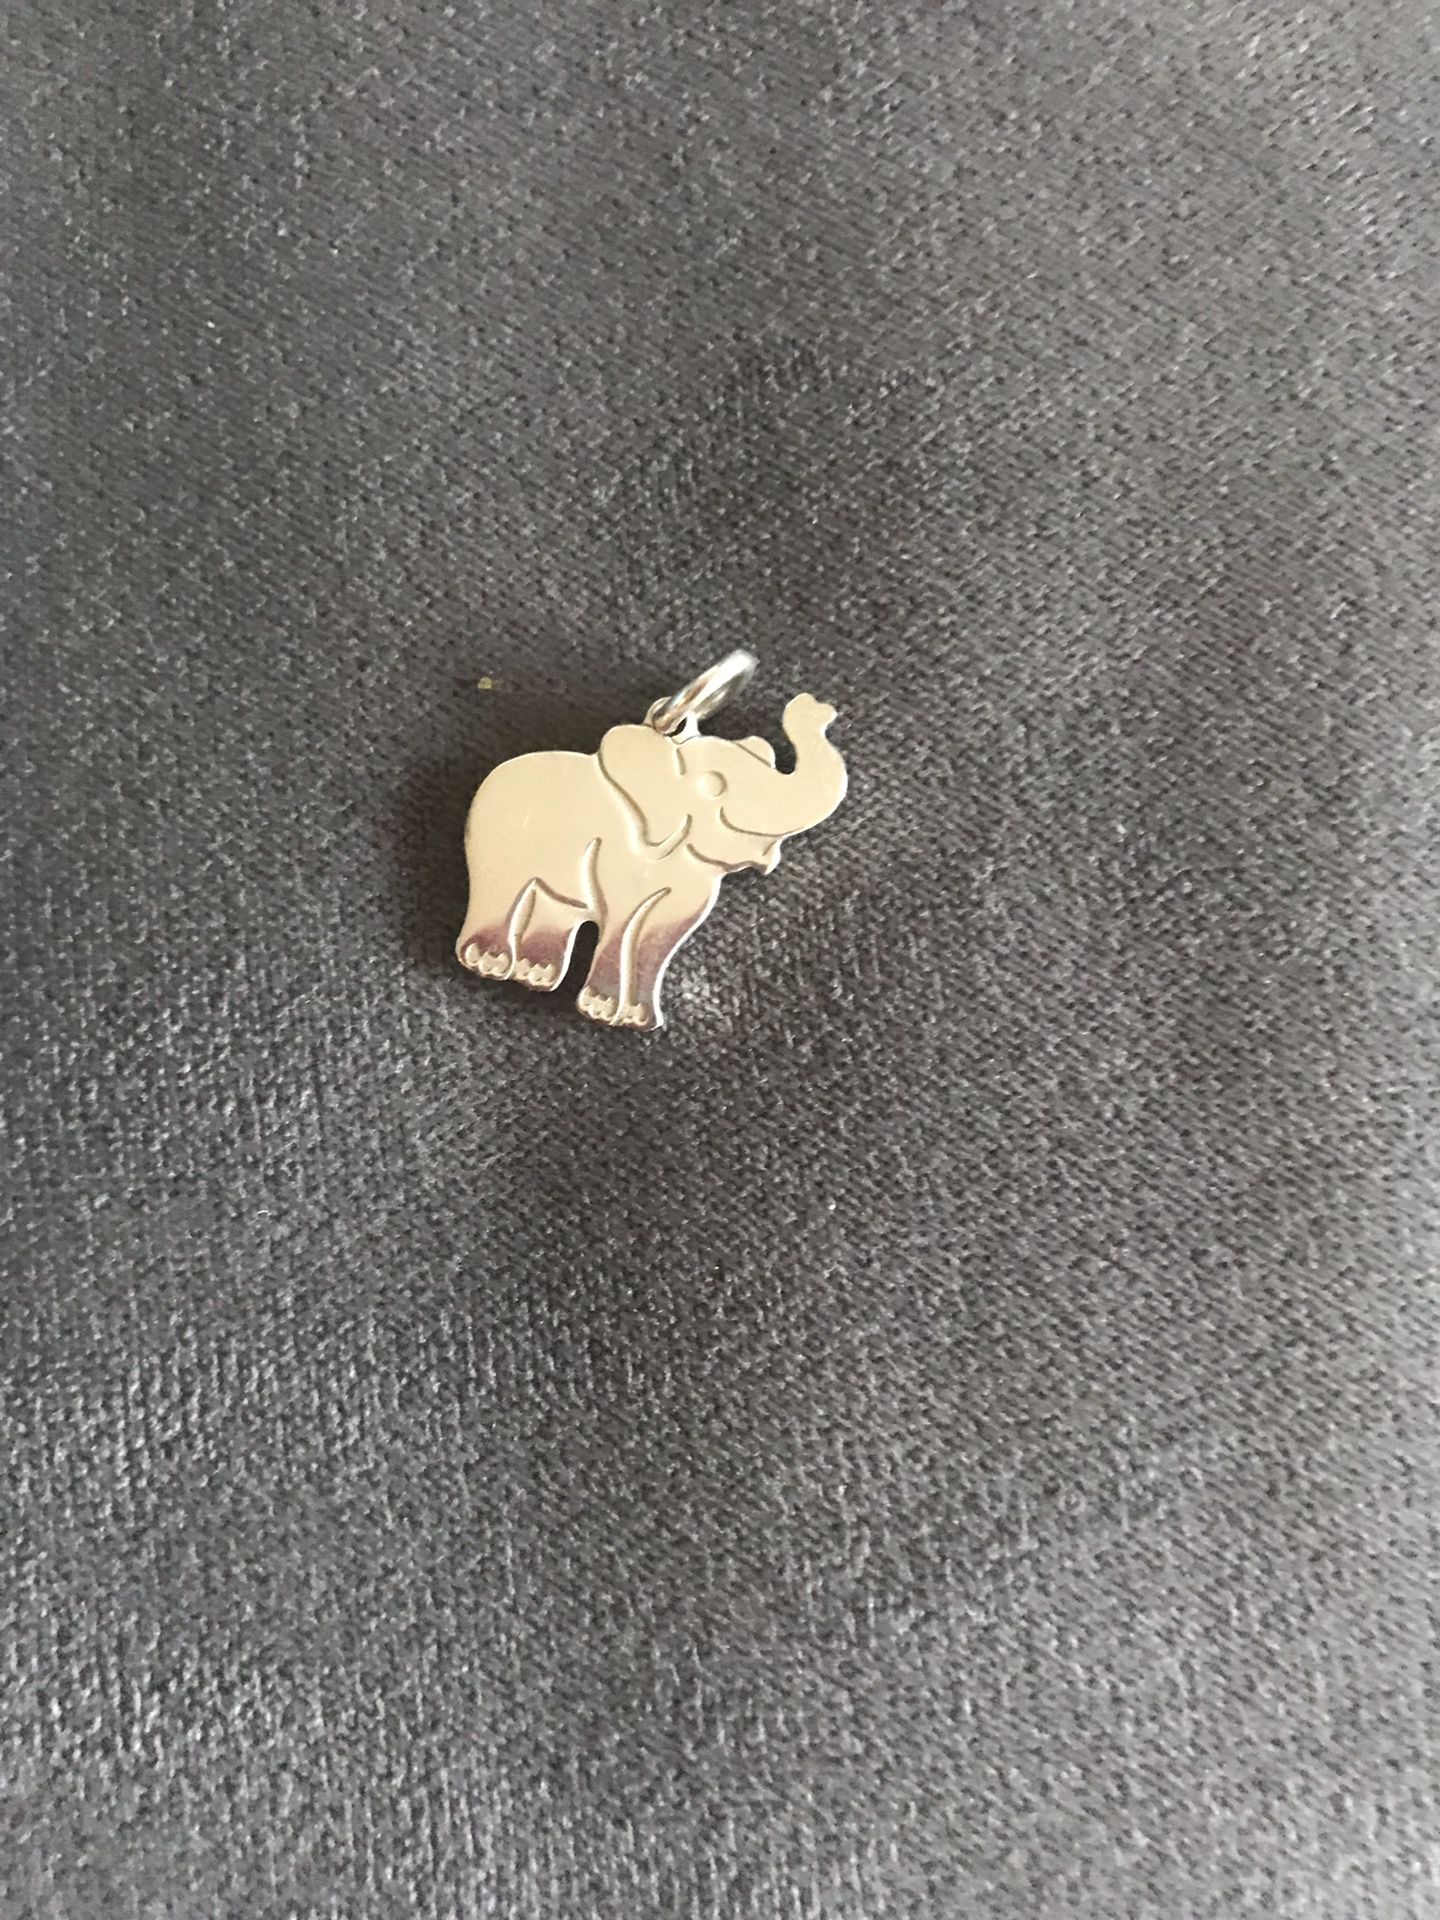 Pick up today!! Tiffany & Co elephant charm w/ necklace!